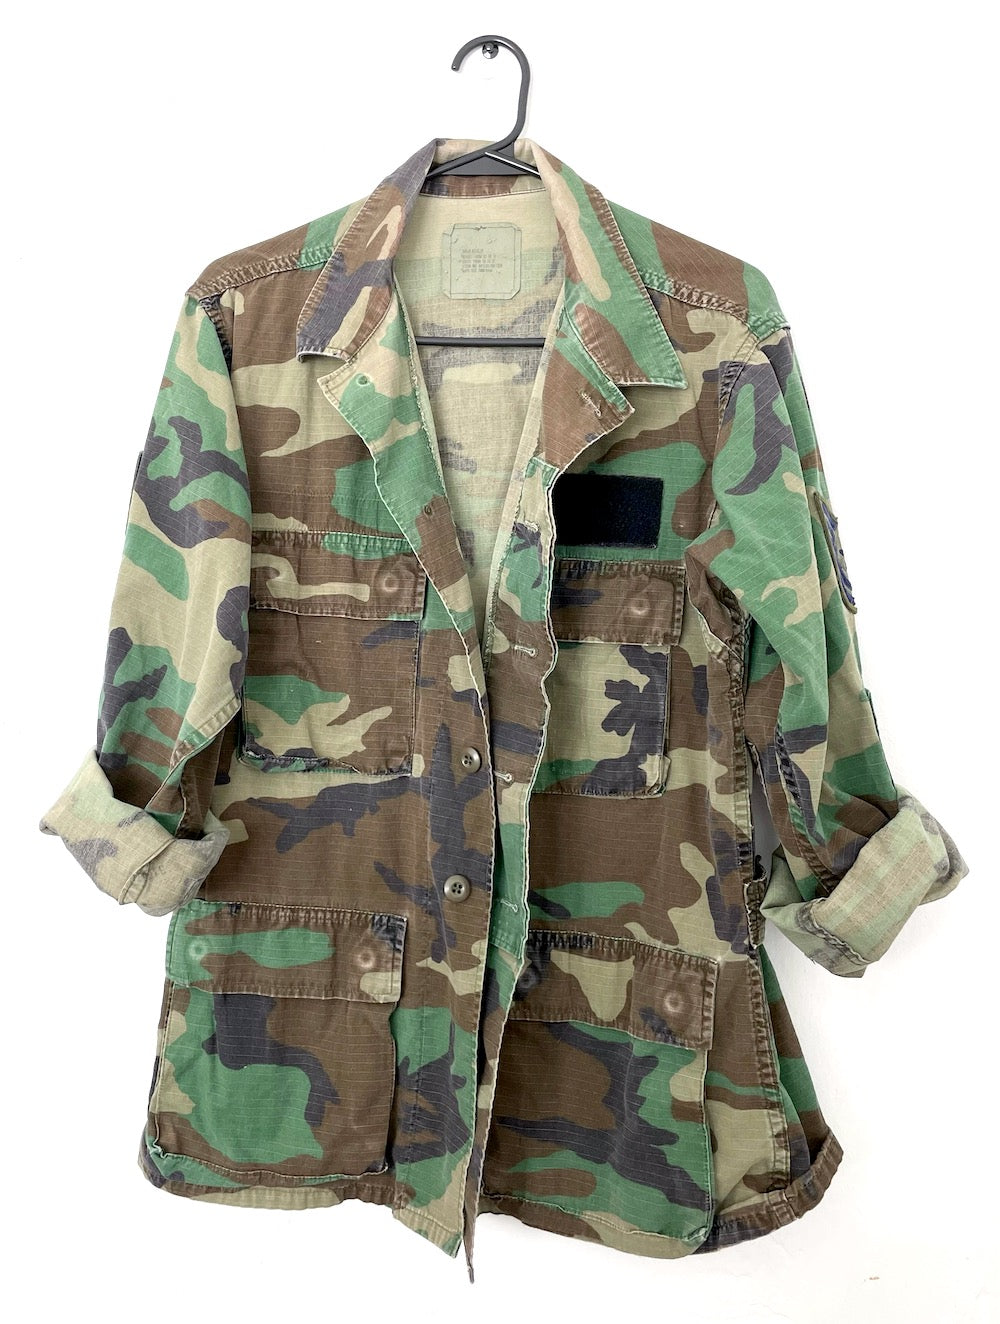 Vintage Oversized Camouflage Print Army Jacket - Size Small/Medium